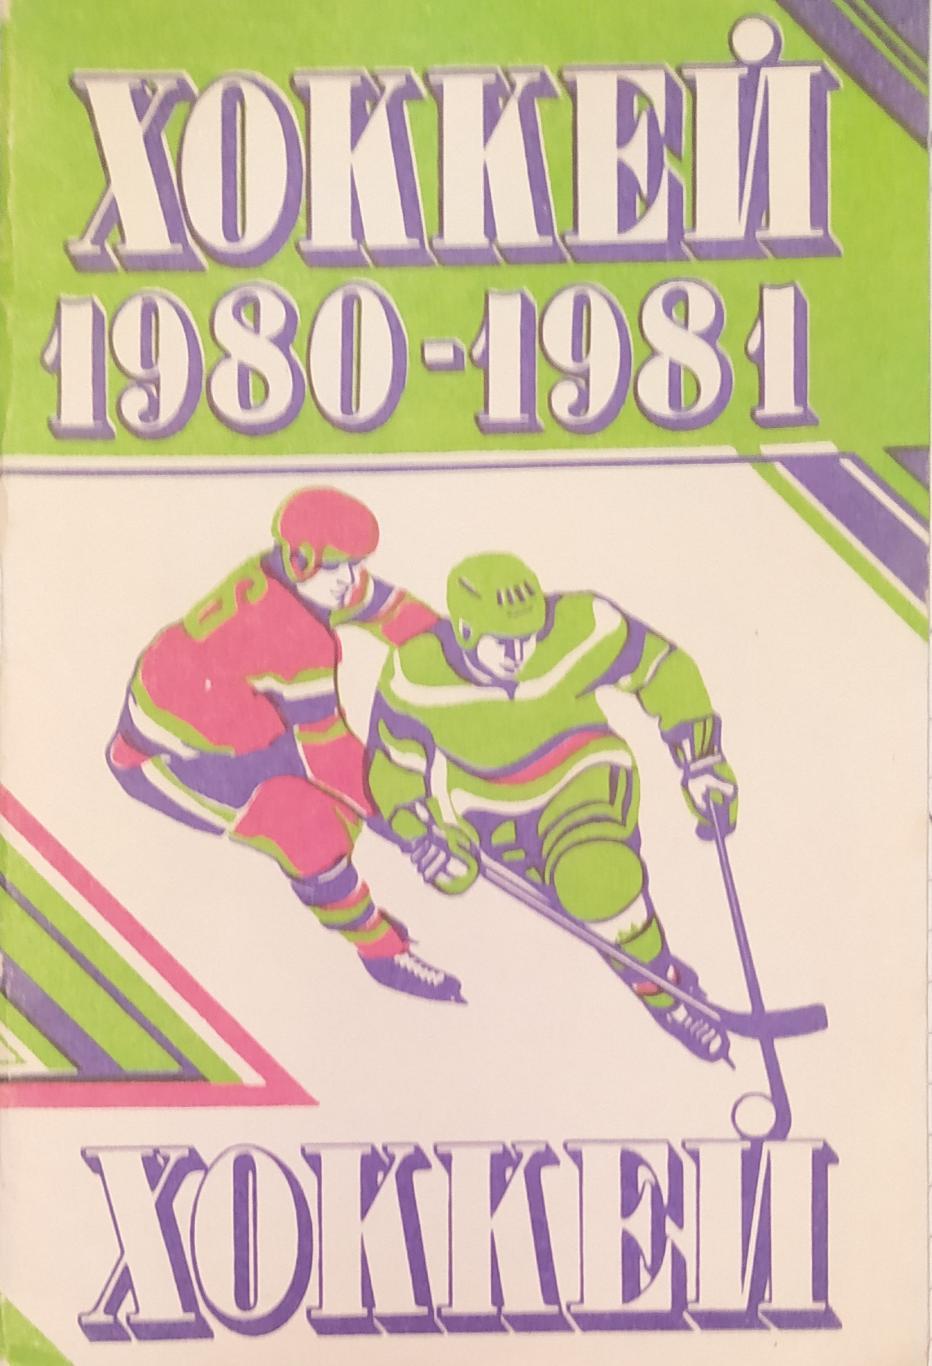 Минск 1980-1981